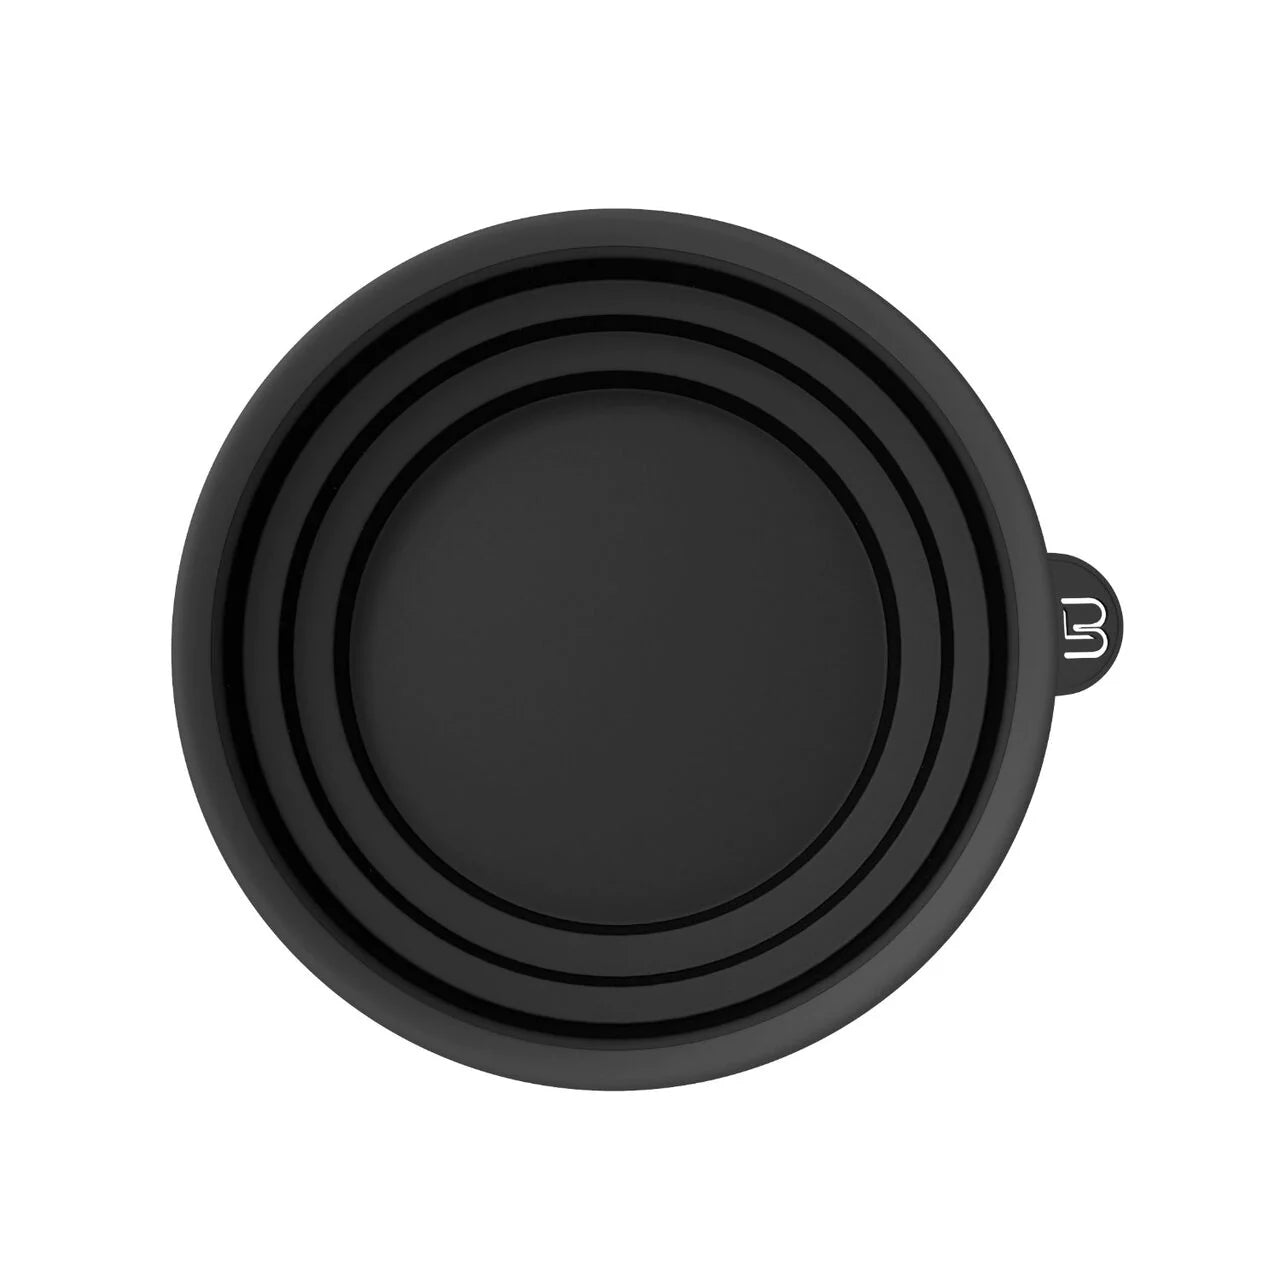 L3VEL 3 Collapsible Tint Bowl - Black